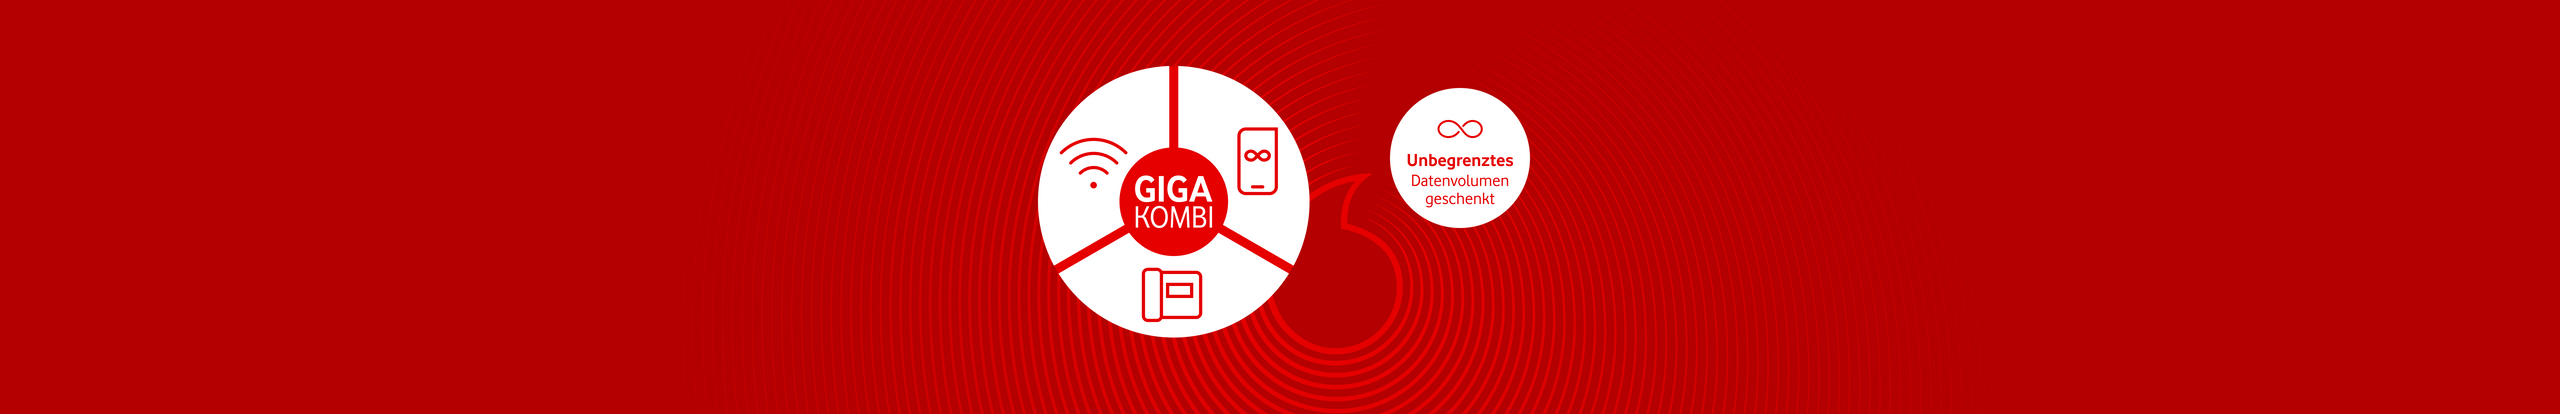 Abbildung des Vodafone GigaKombi Logos